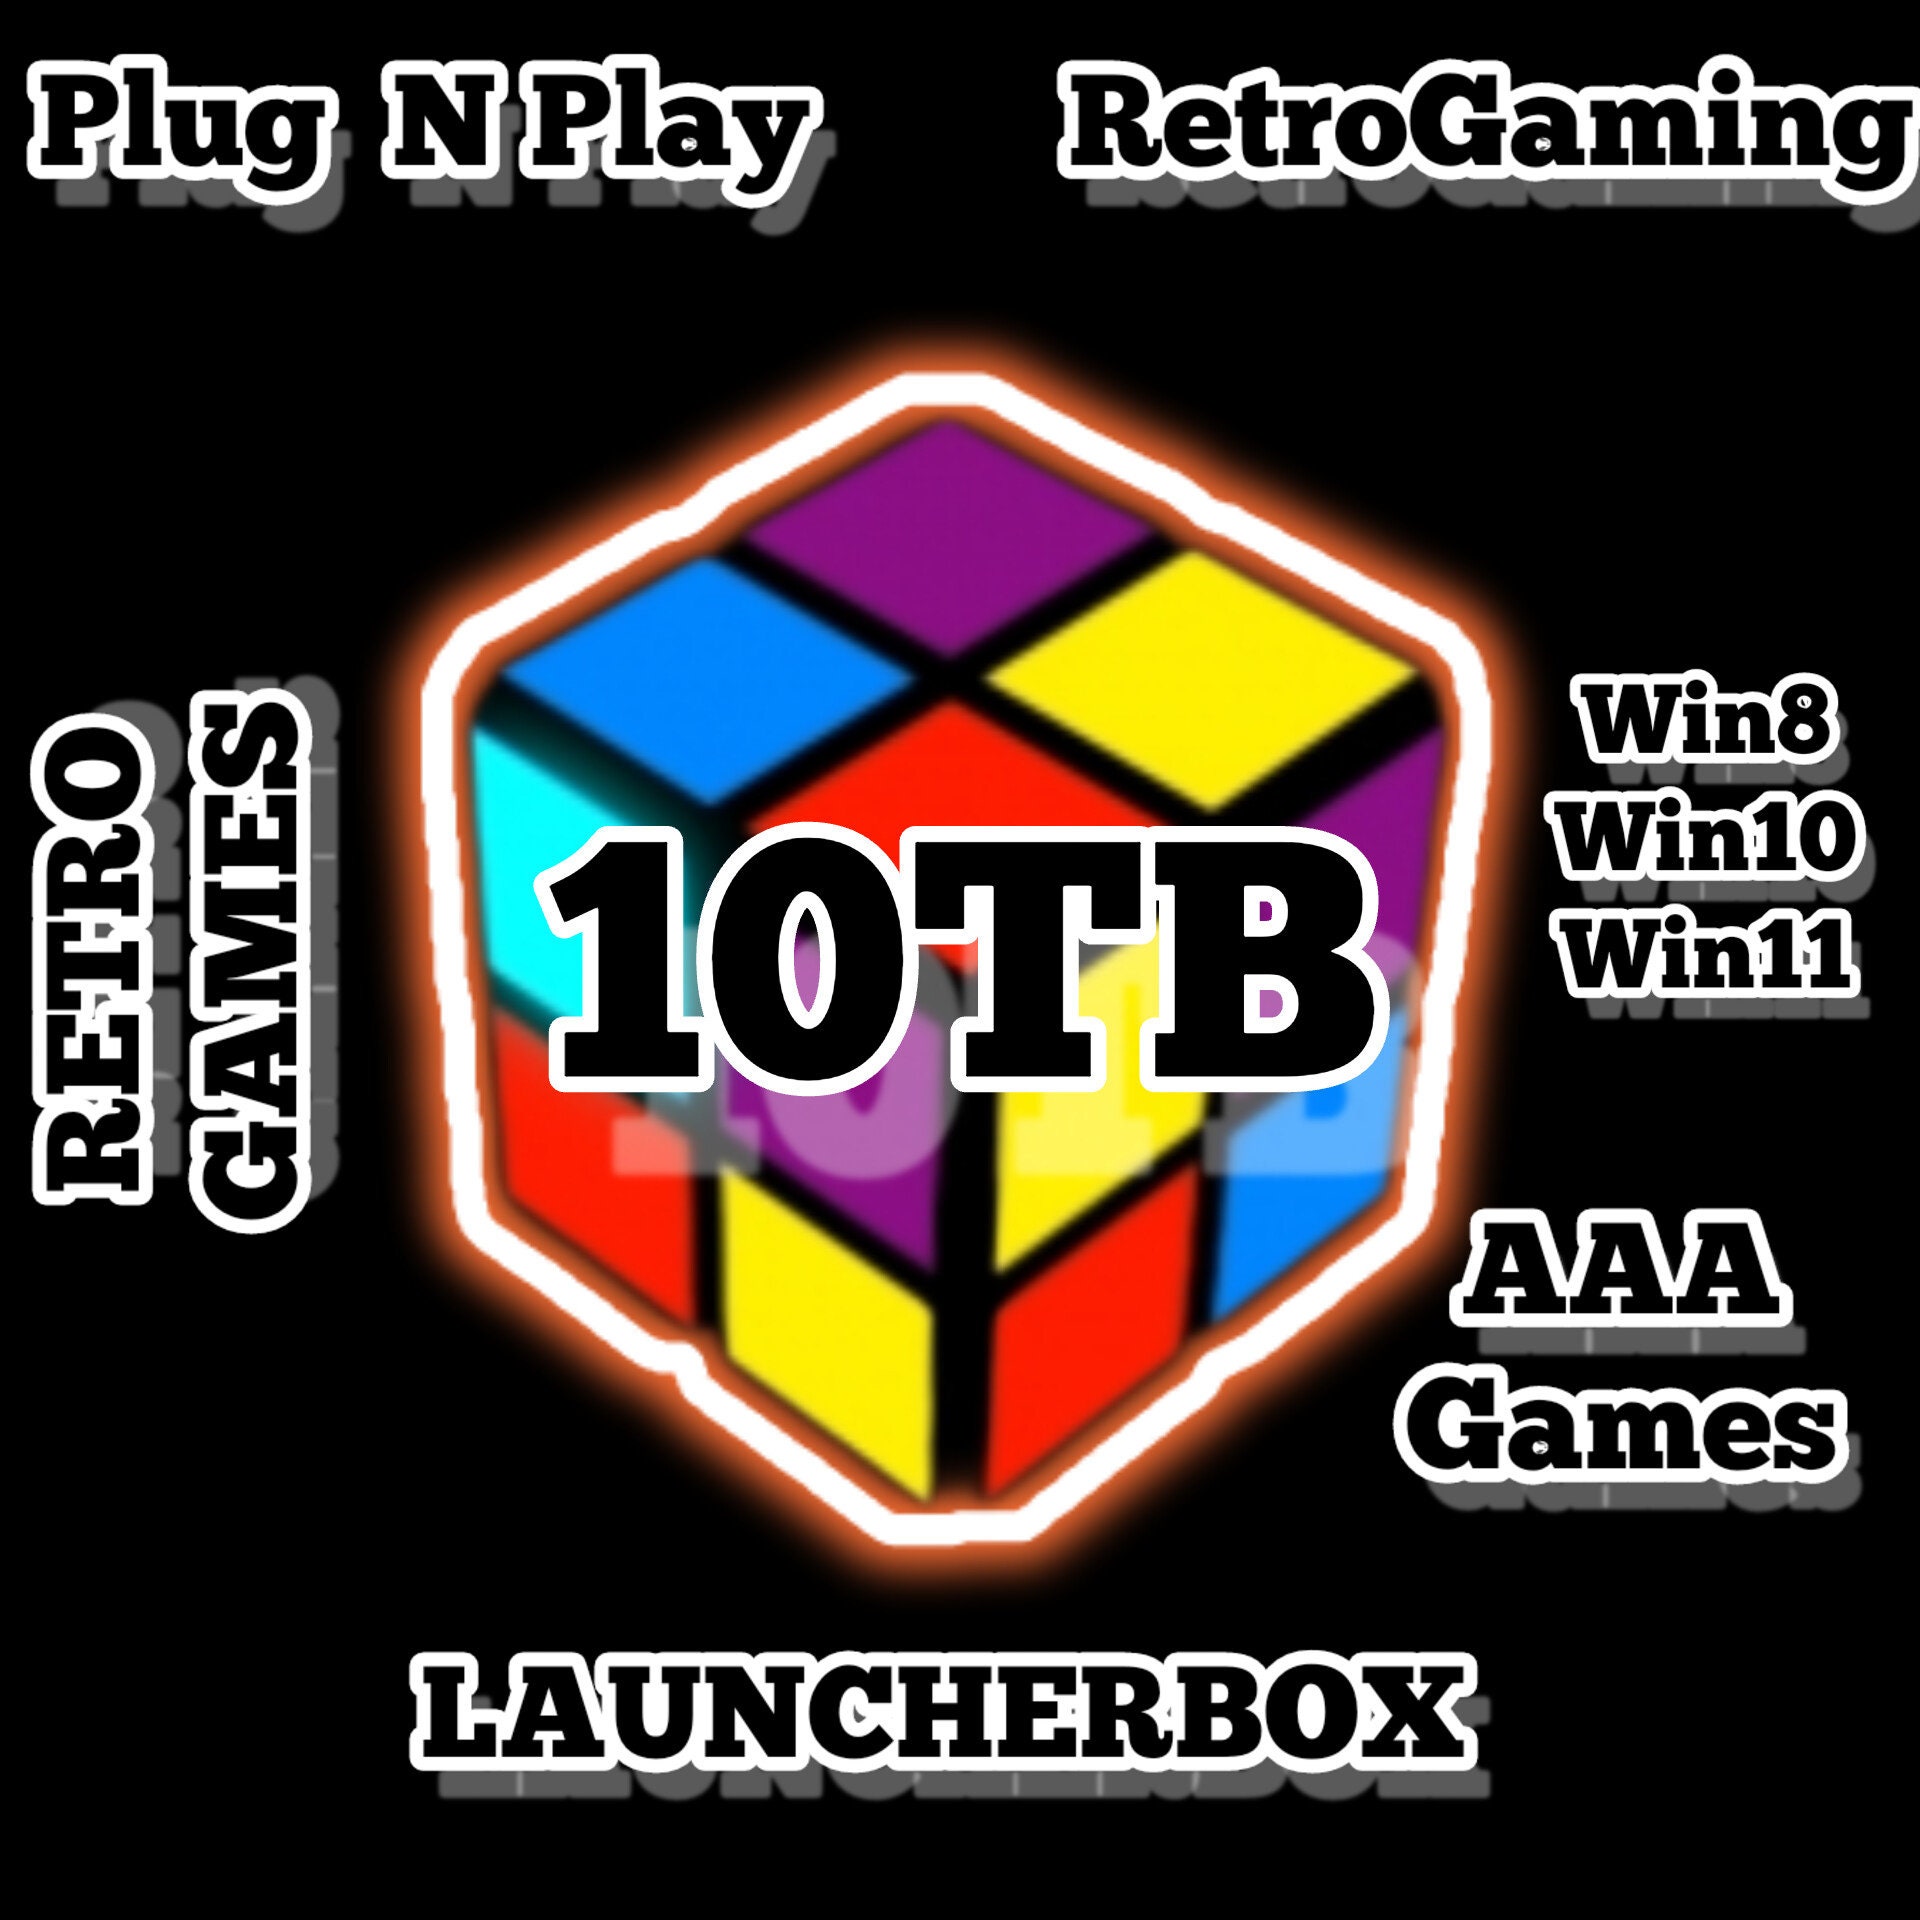 Tie Break Images - LaunchBox Games Database